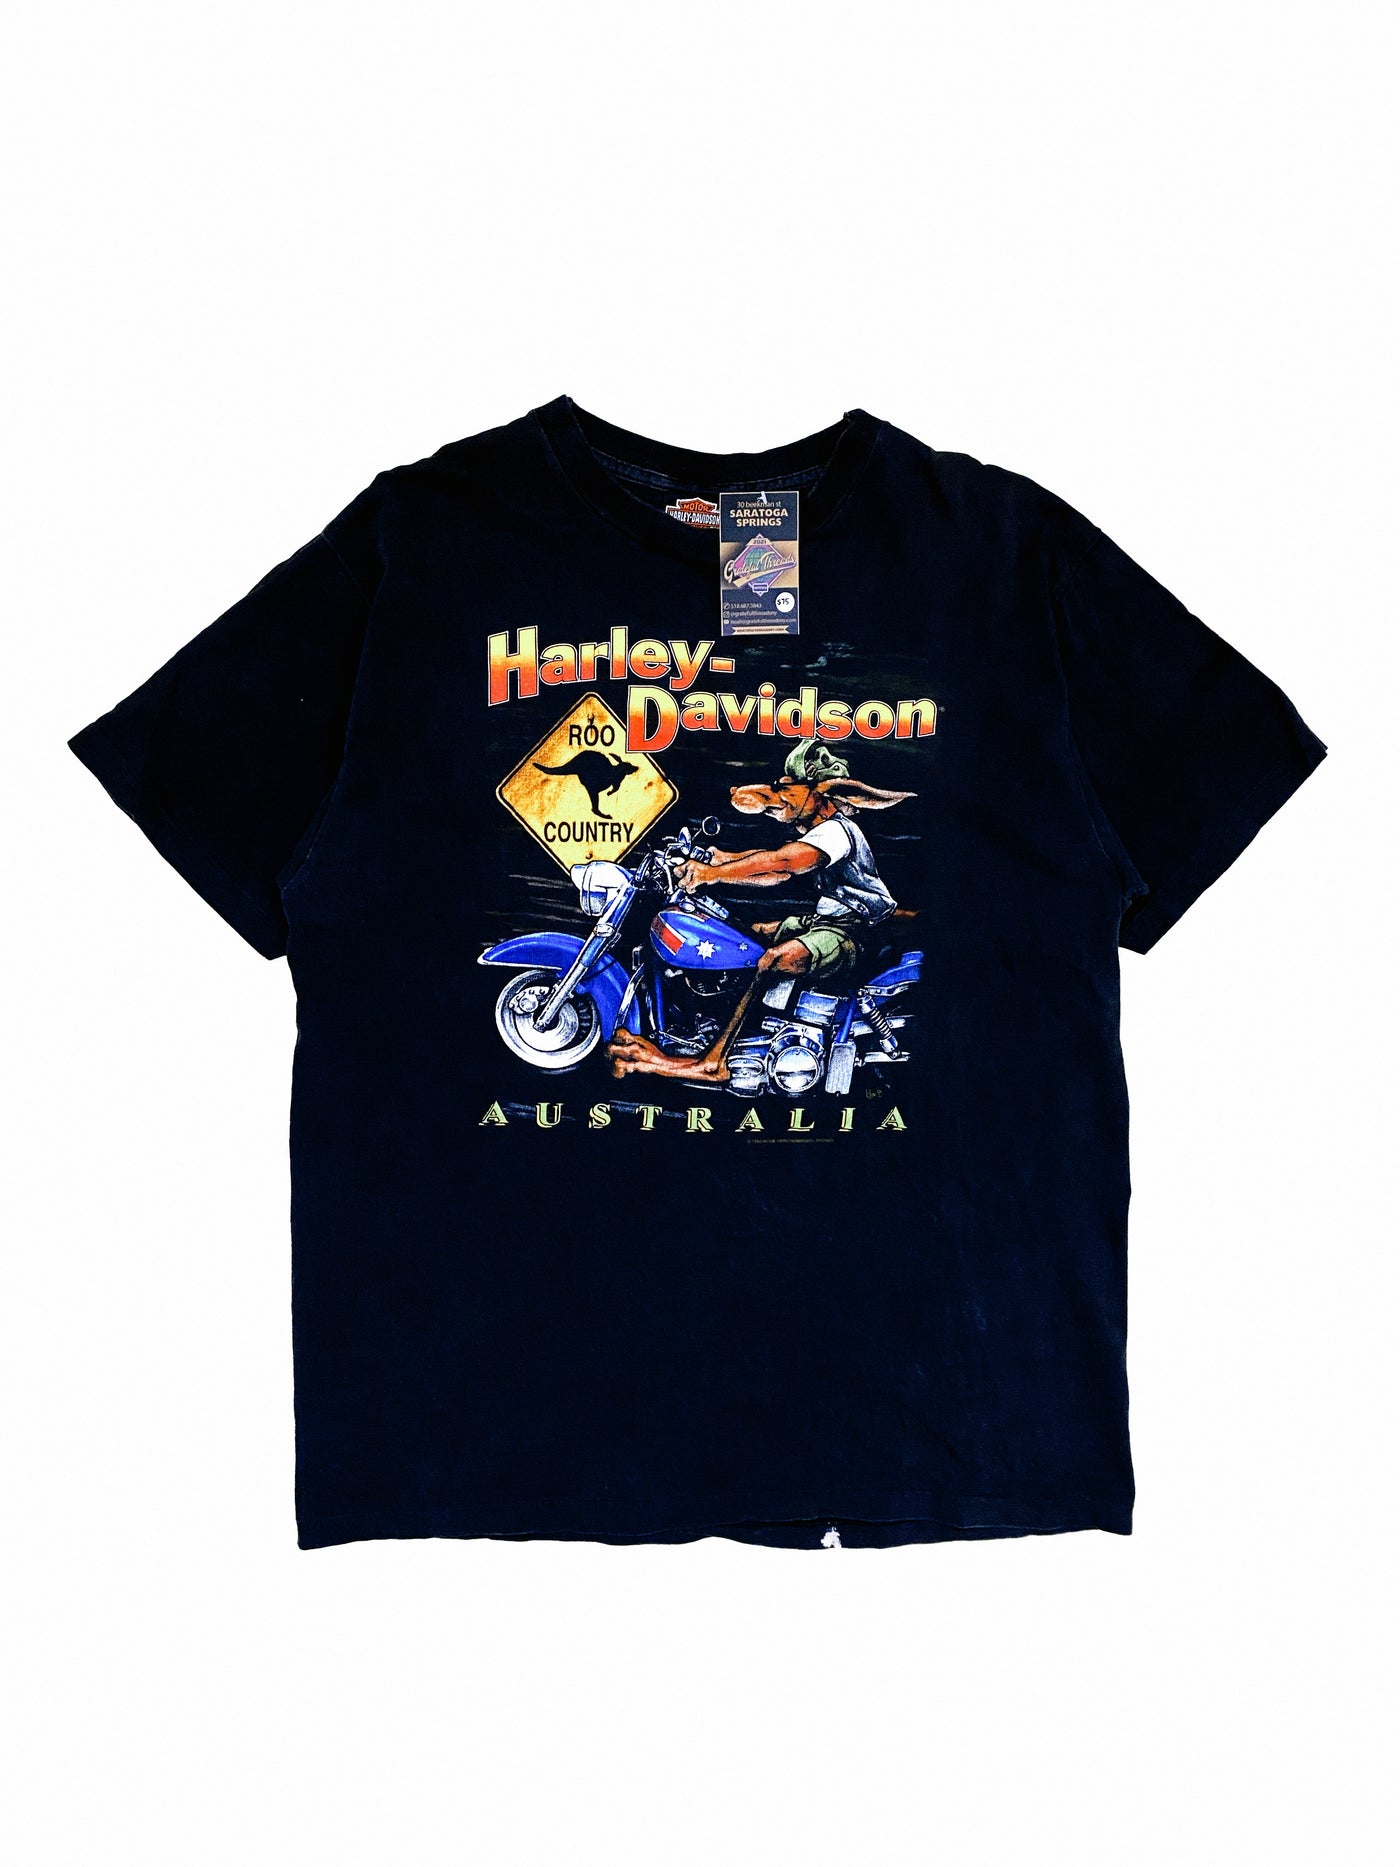 Vintage 1992 Harley Davidson Australia Roo Country T-Shirt